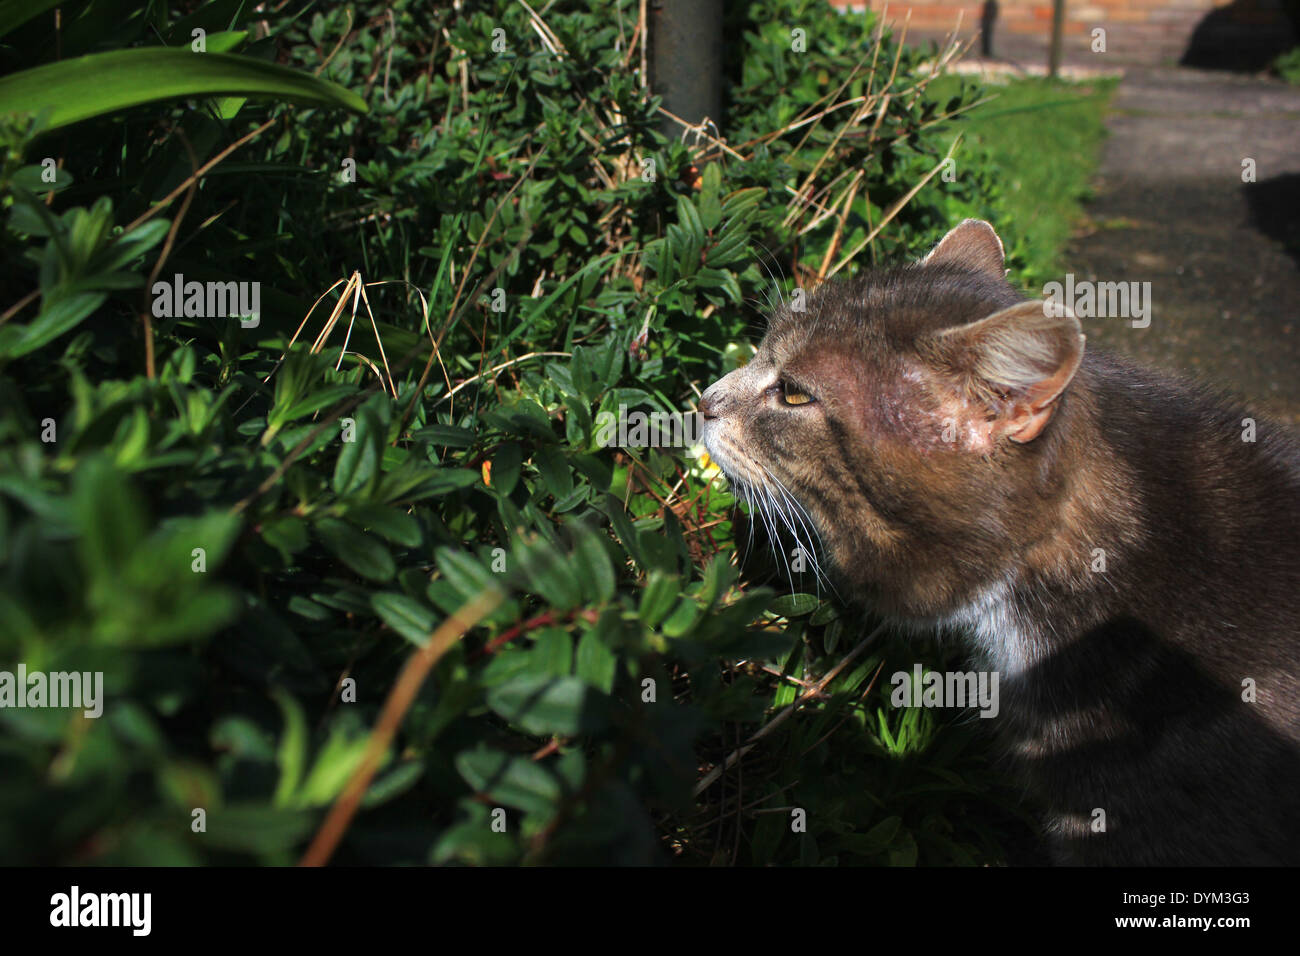 Tabby cat sniffing pianta da giardino percorso Foto Stock